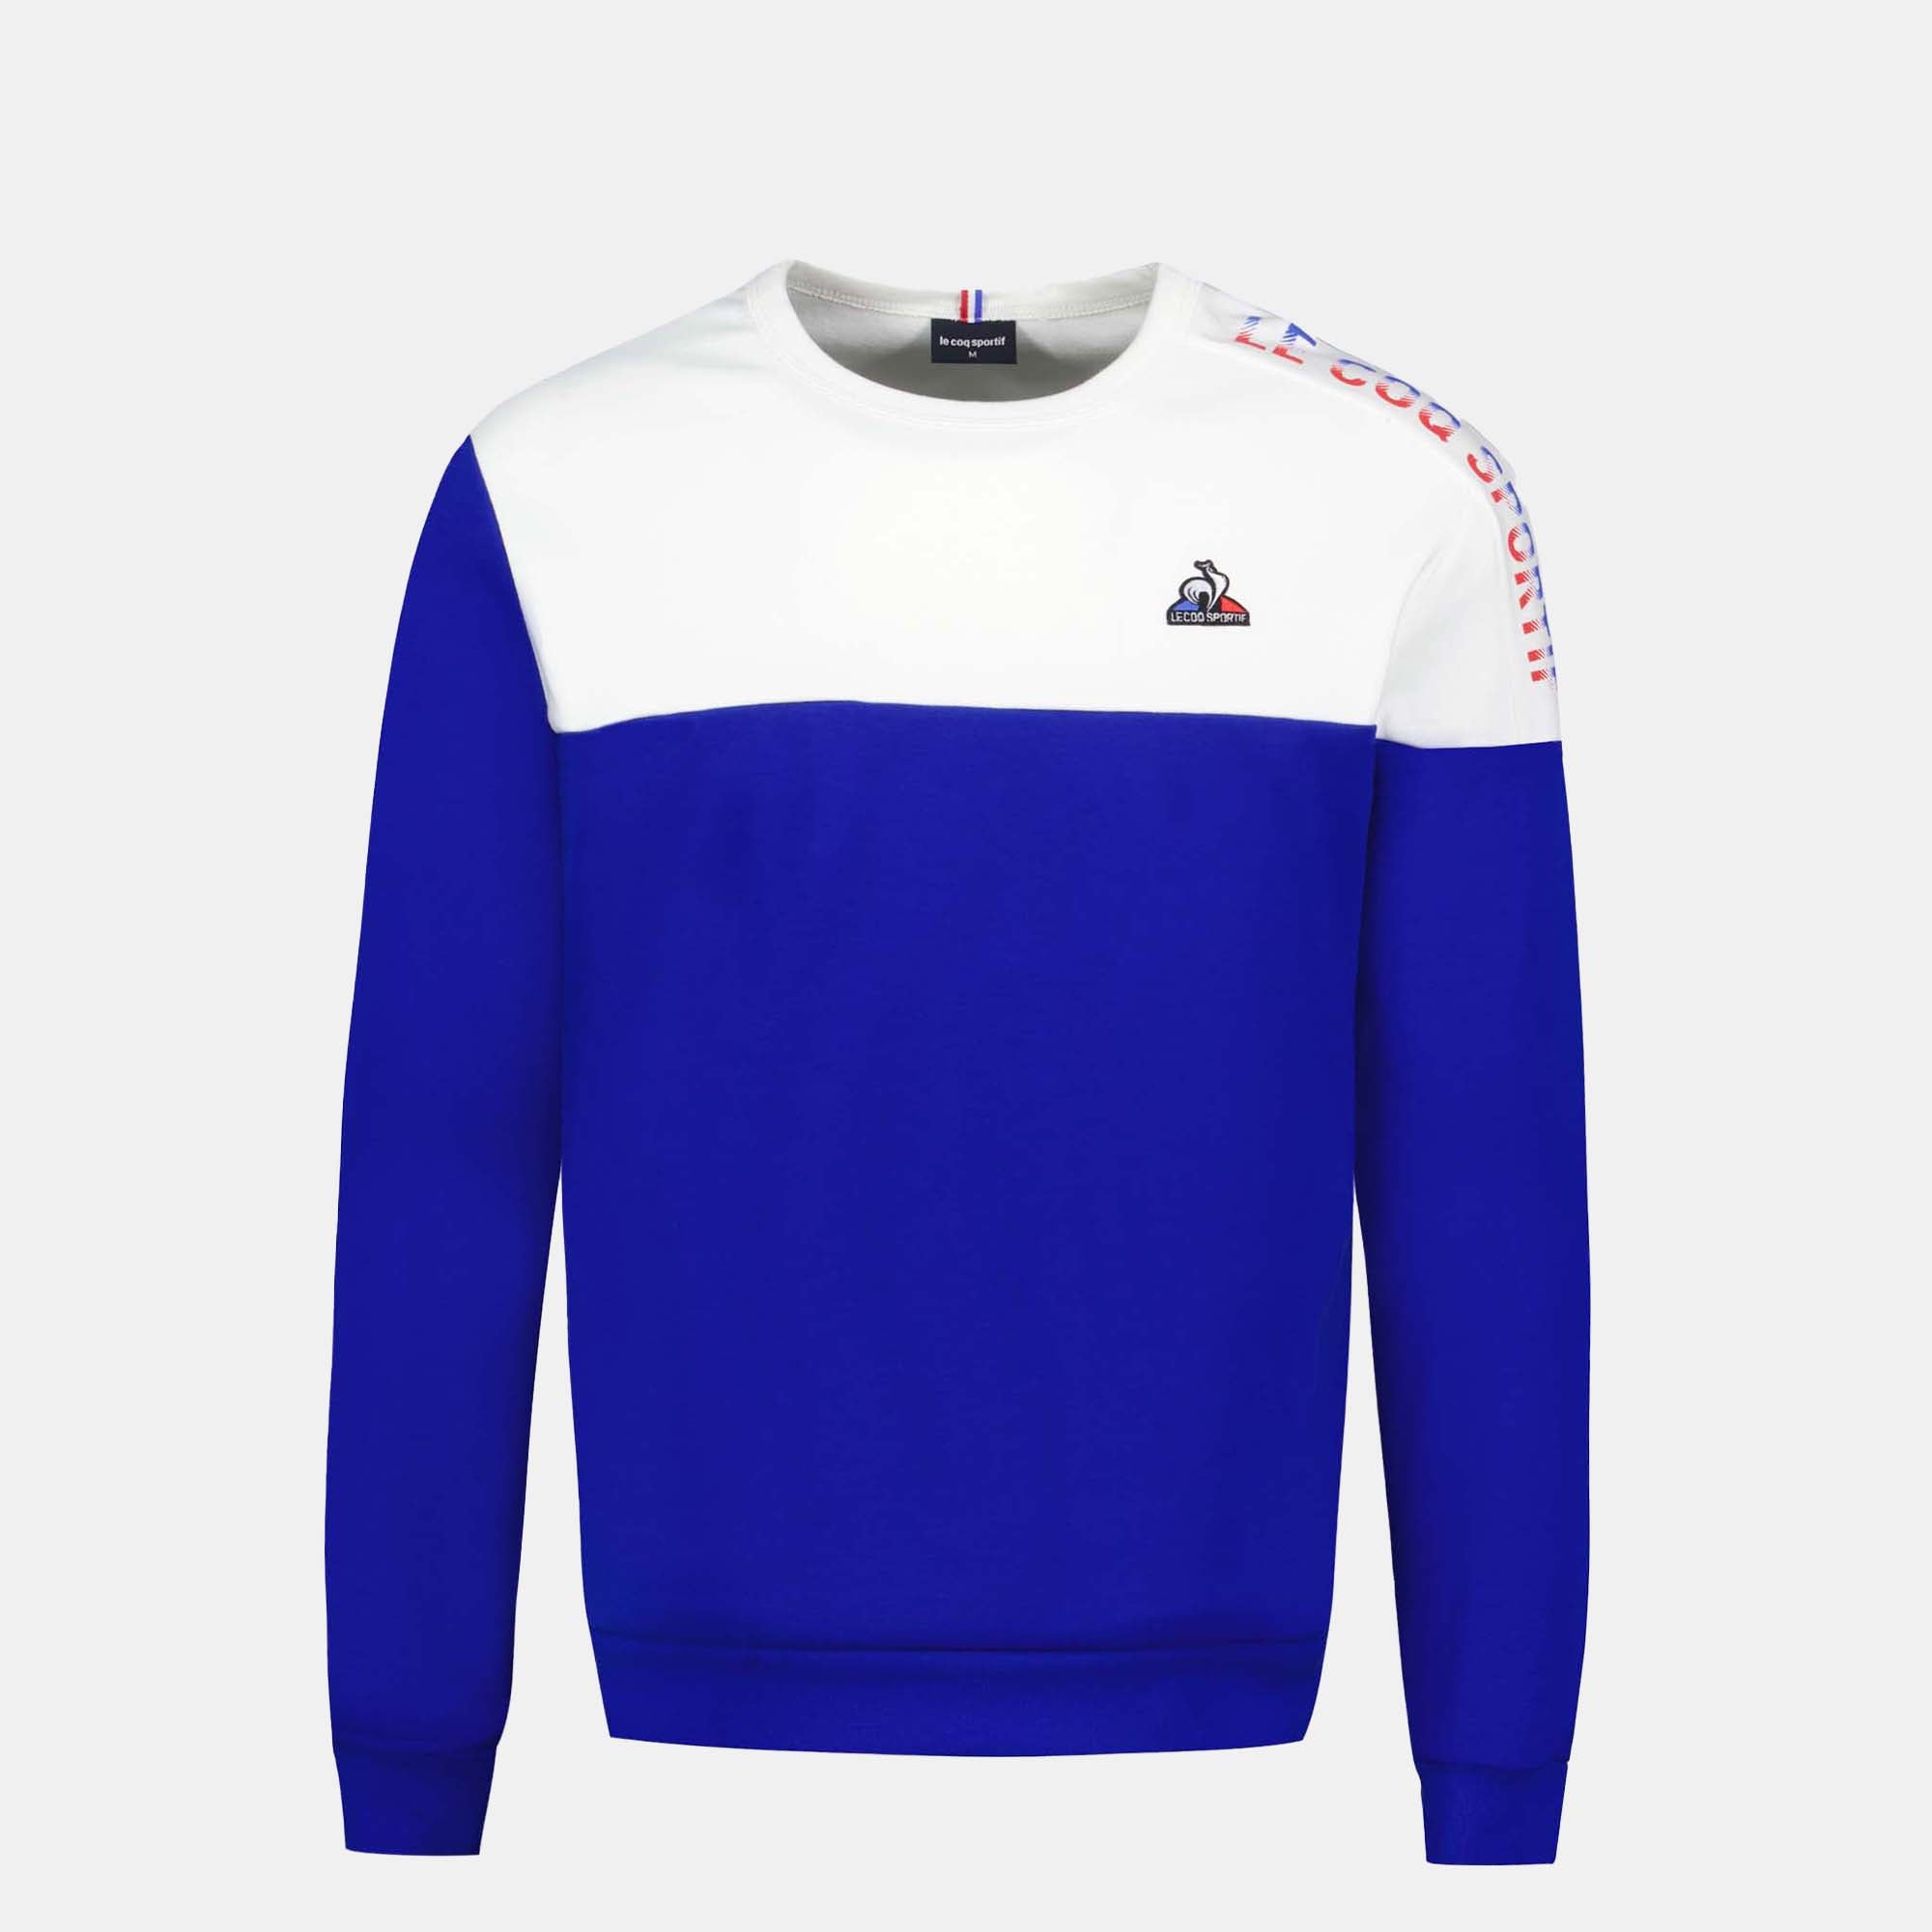 Le sportswear signature pour rayonner in Azul blanc rouge avec l&